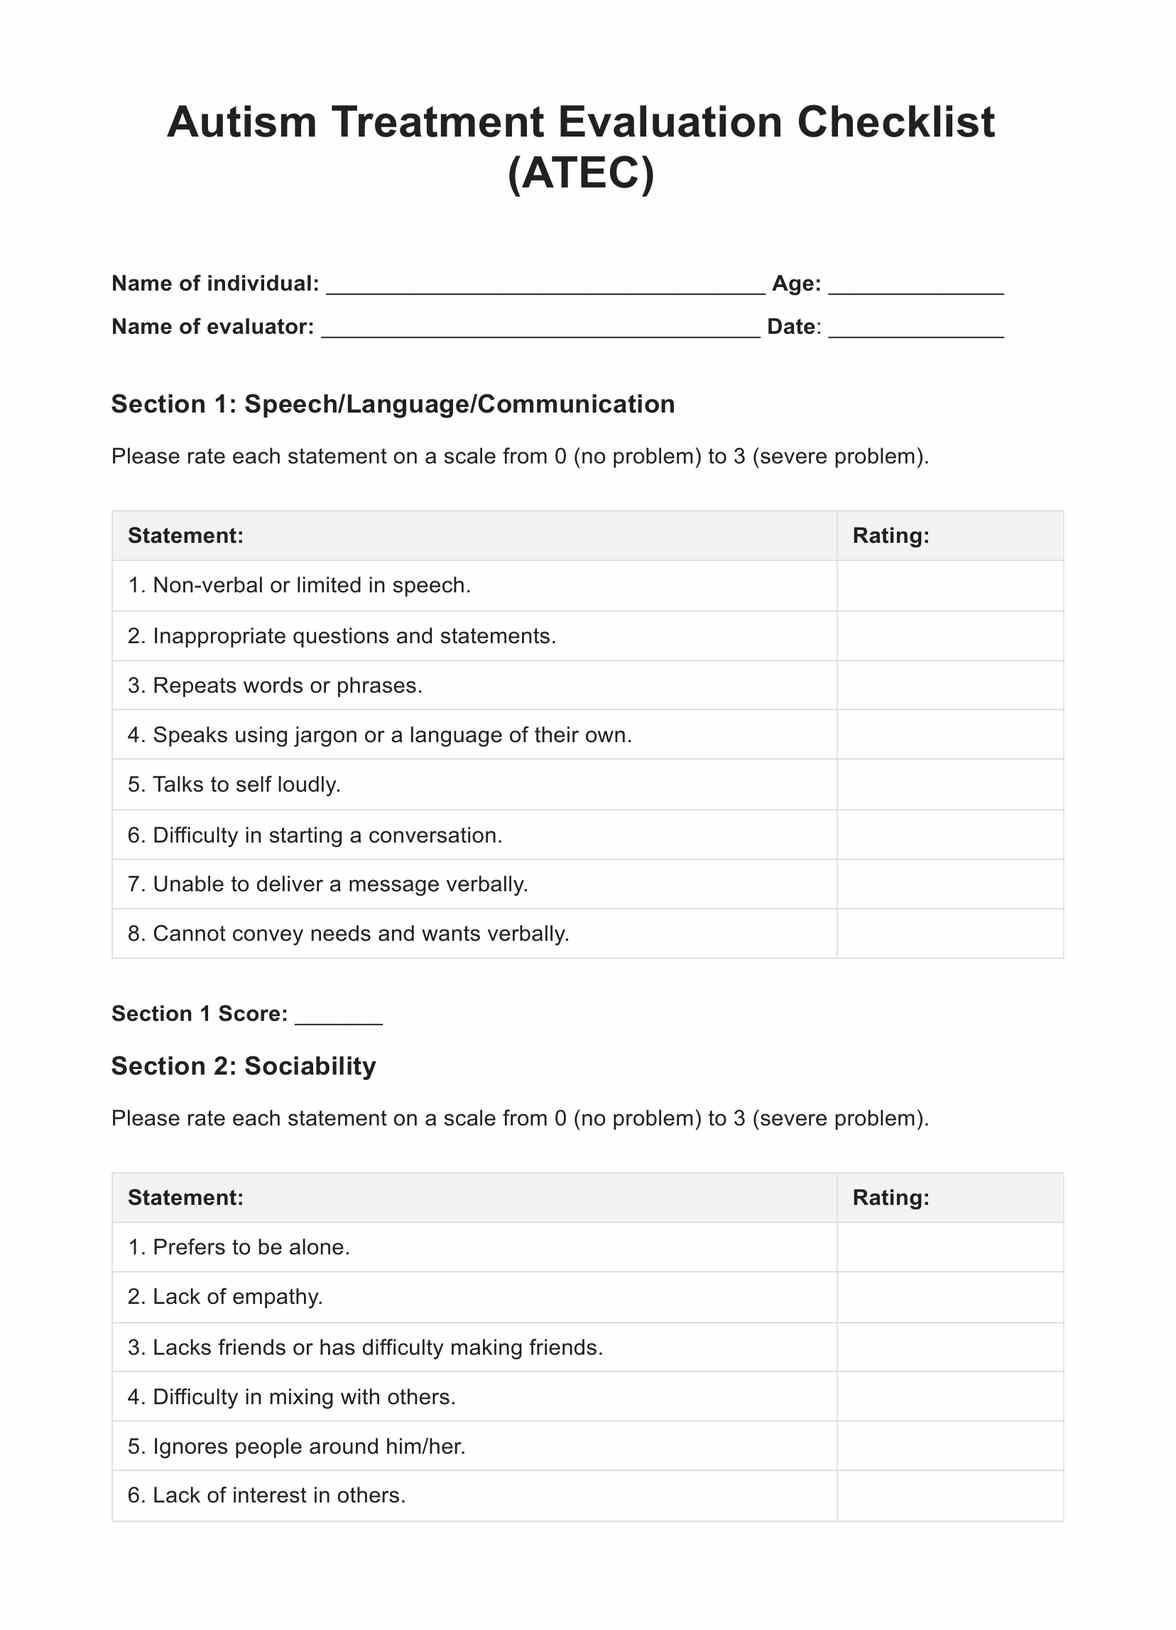 Autism Treatment Evaluation Checklist (ATEC) PDF Example